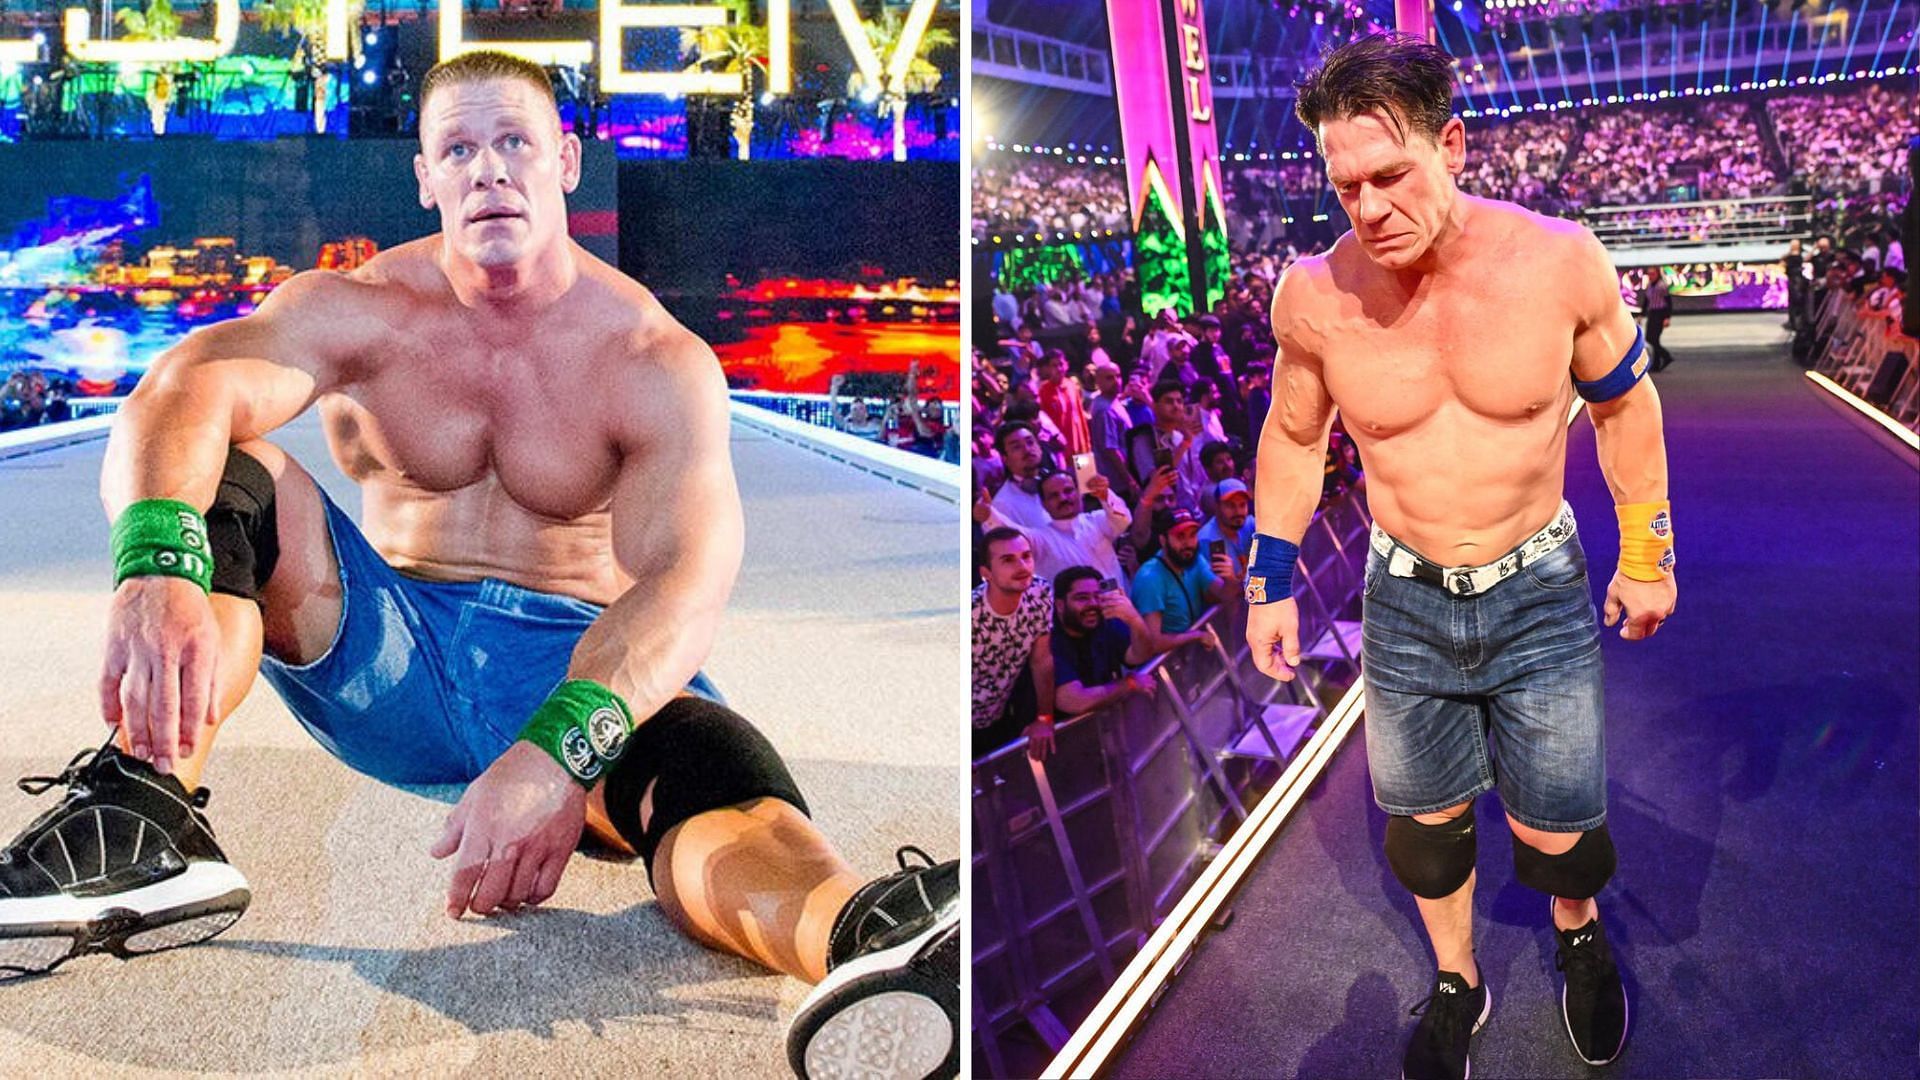 John Cena is a 16-time World Champion [Image credits: wwe.com]